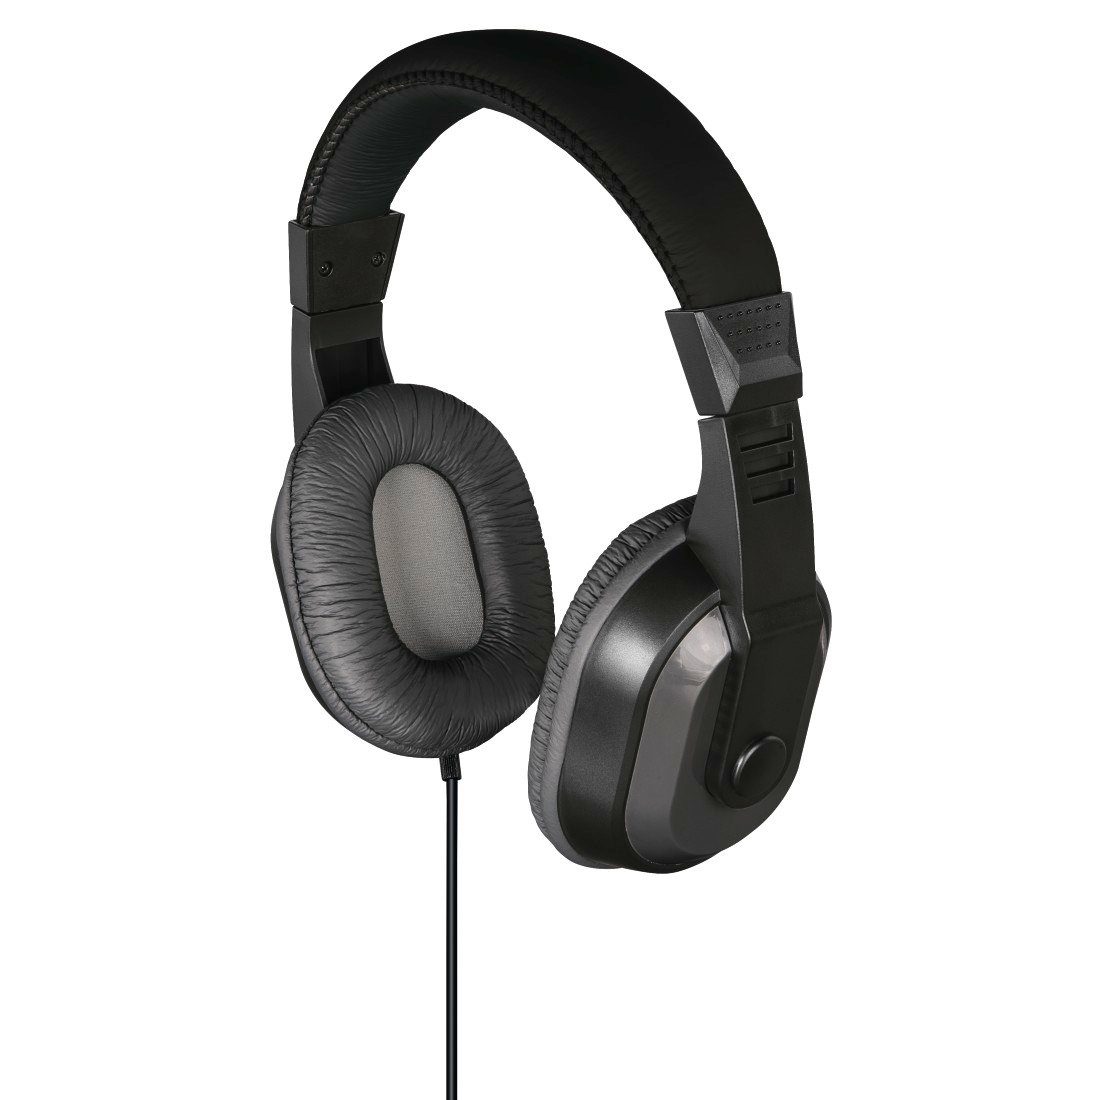 Kopfhörer Klang) Thomson schwarz angenehmer guter mit (Geräuschisolierung, Over Over-Ear-Kopfhörer passiver Geräuschreduzierung, Ear Tragekomfort,